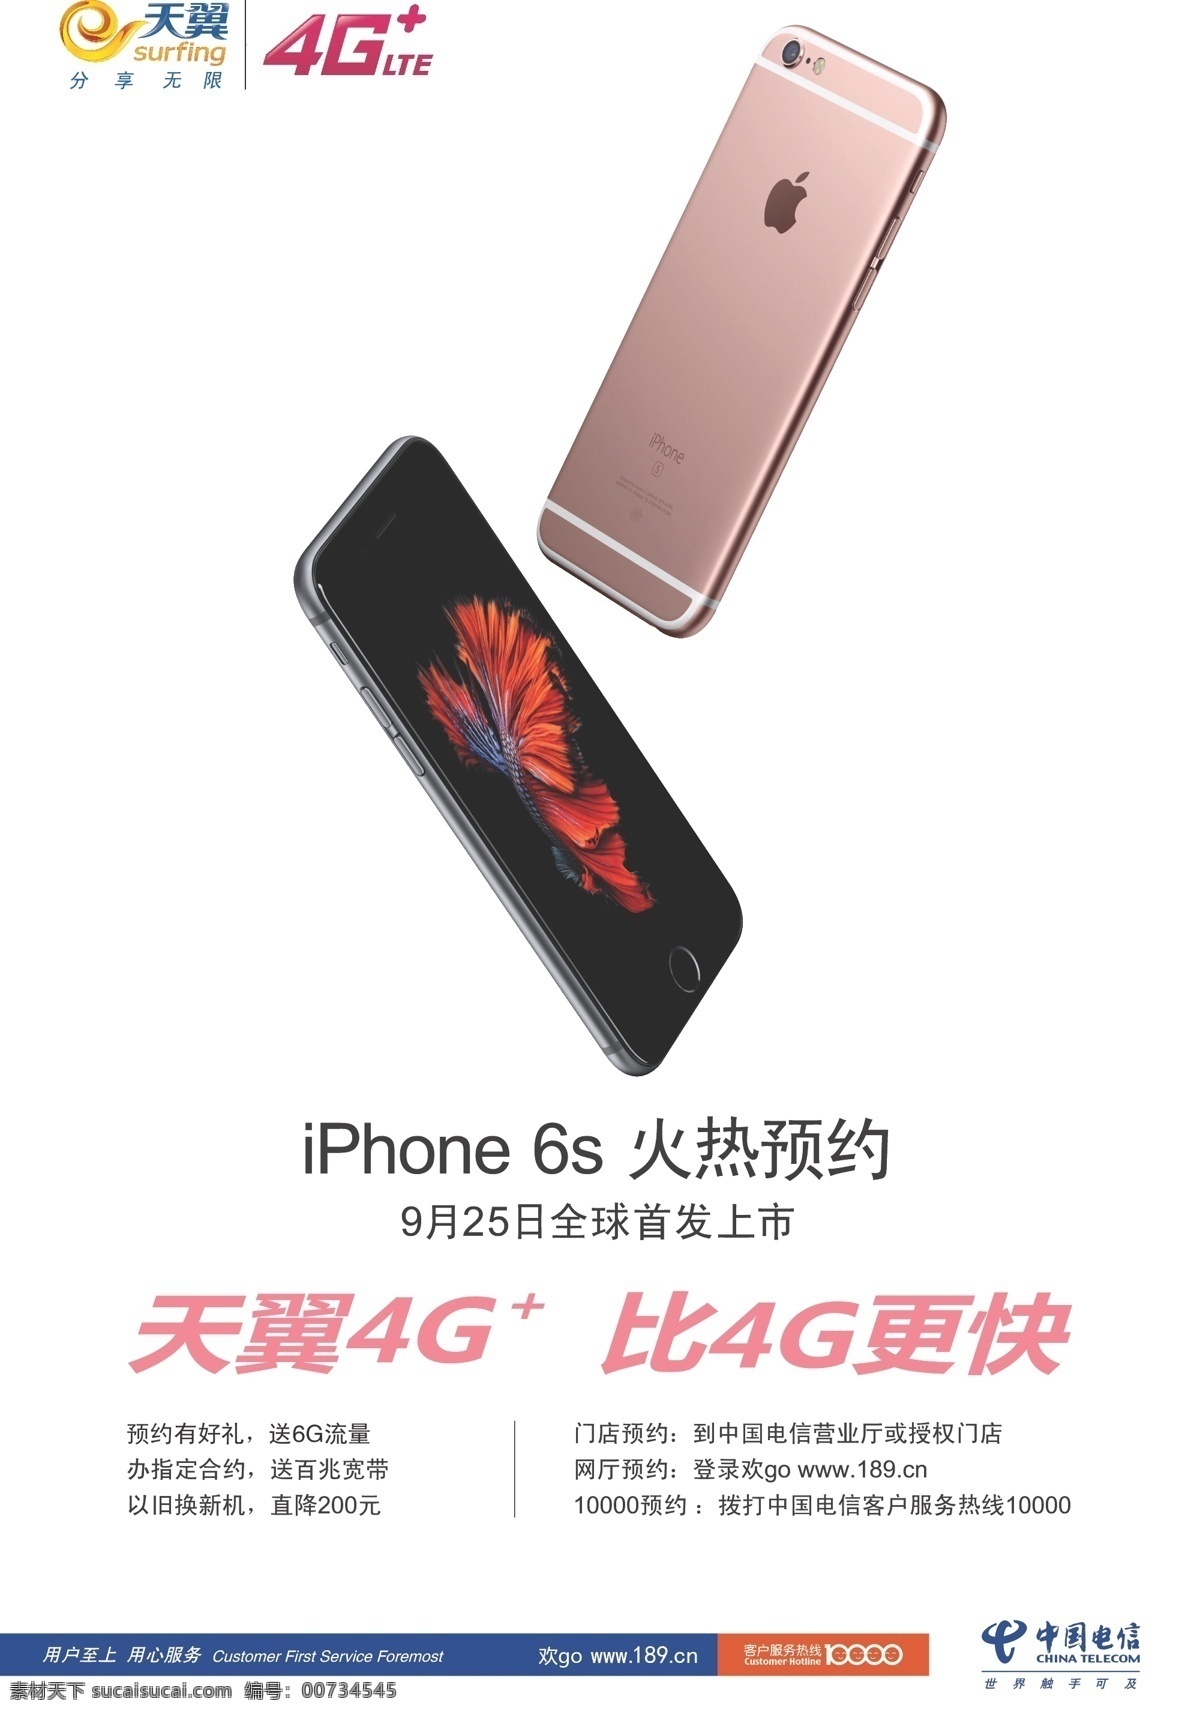 iphone6 预约 海报 预约海报 苹果6 天翼4g 电信手机 花 苹果手机 现代科技 数码产品